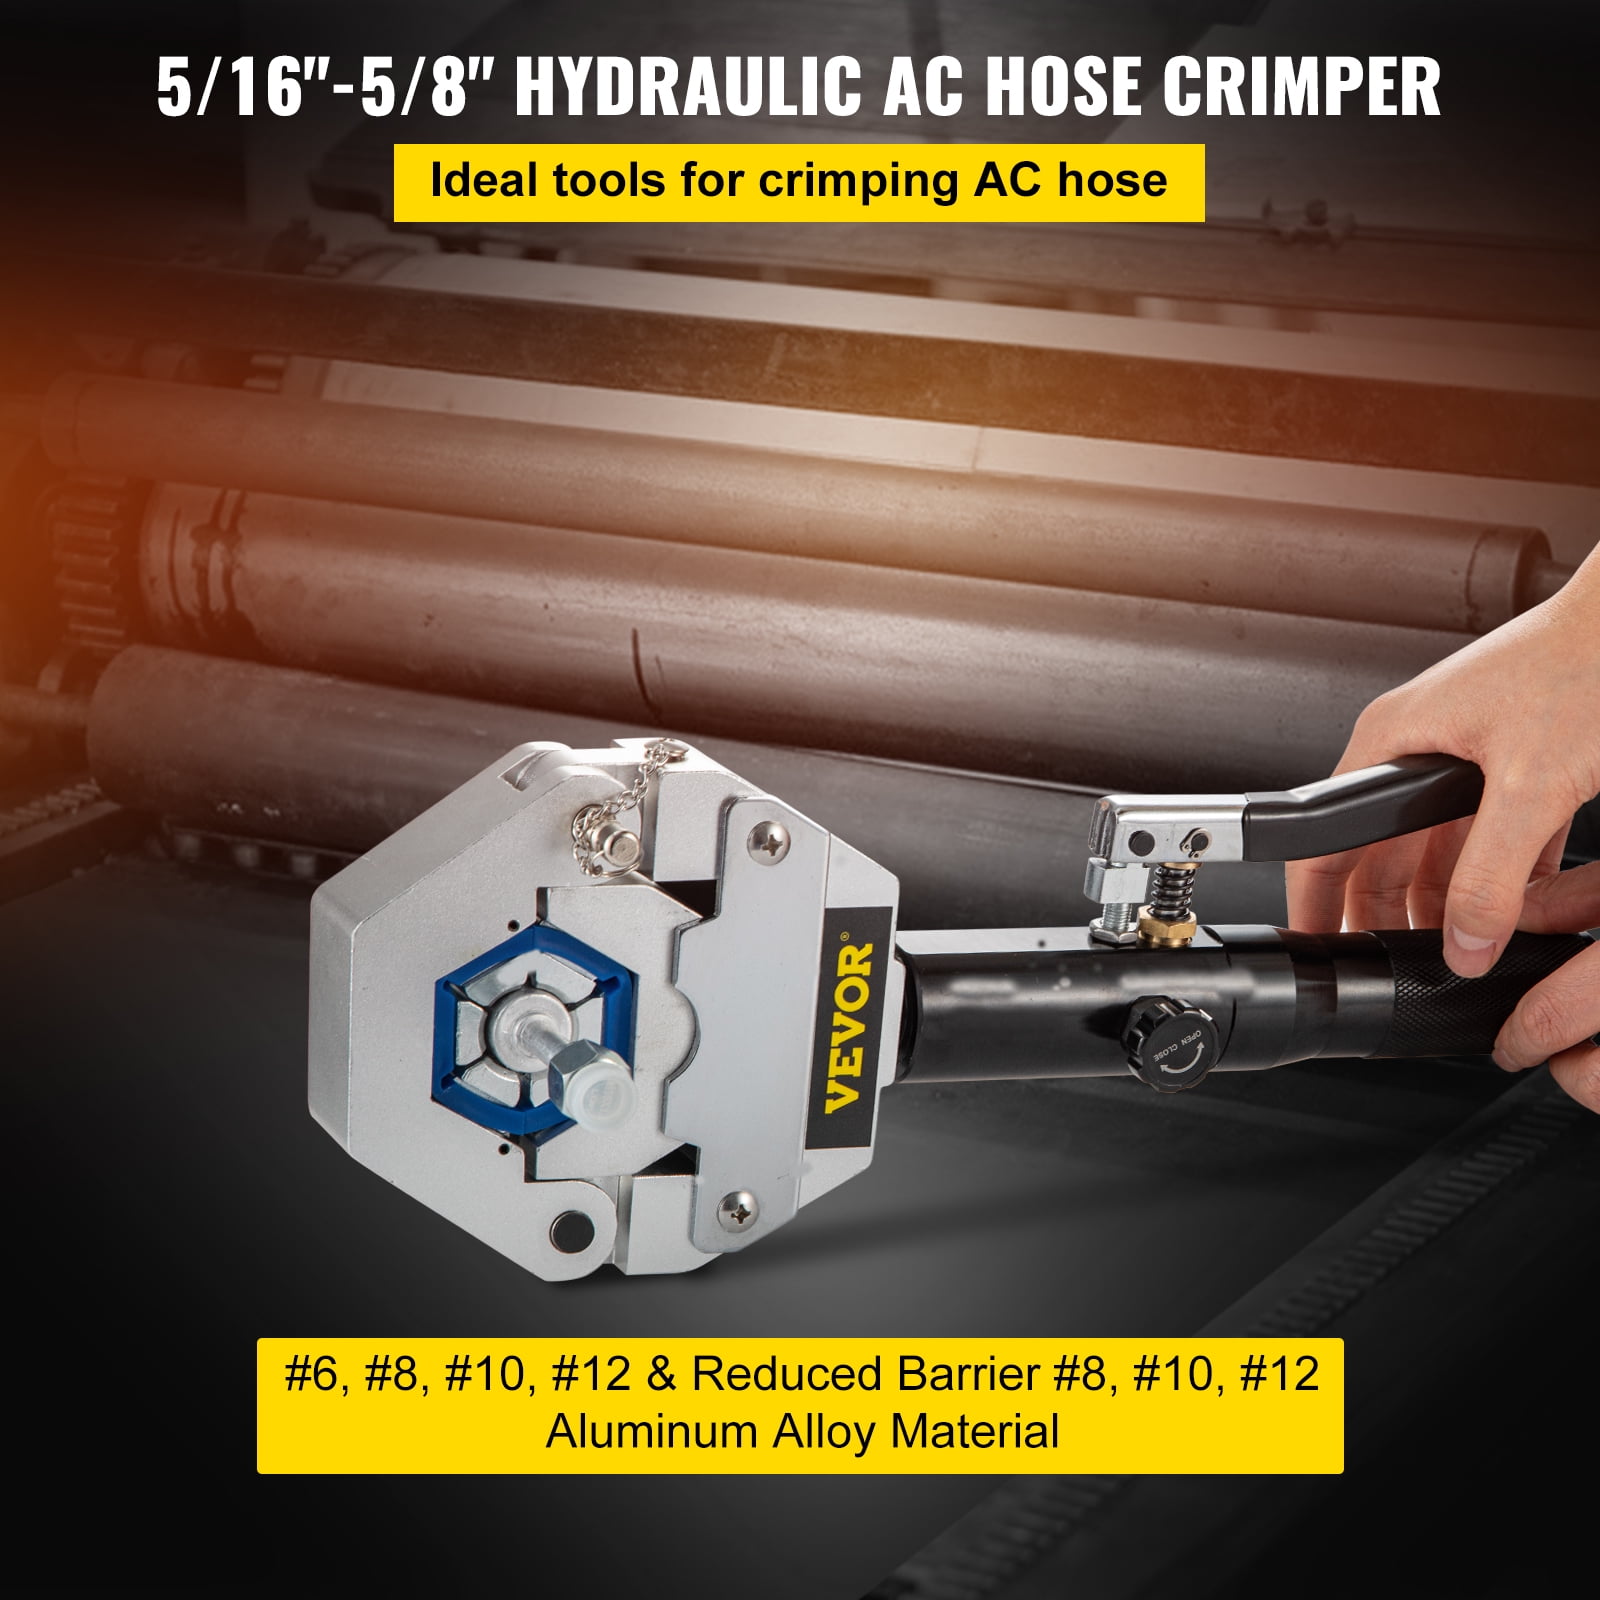 VEVOR 71500 Hydraulic Hose Ferrule Crimper 5/16"-5/8" A/C Hose Crimping Tools 